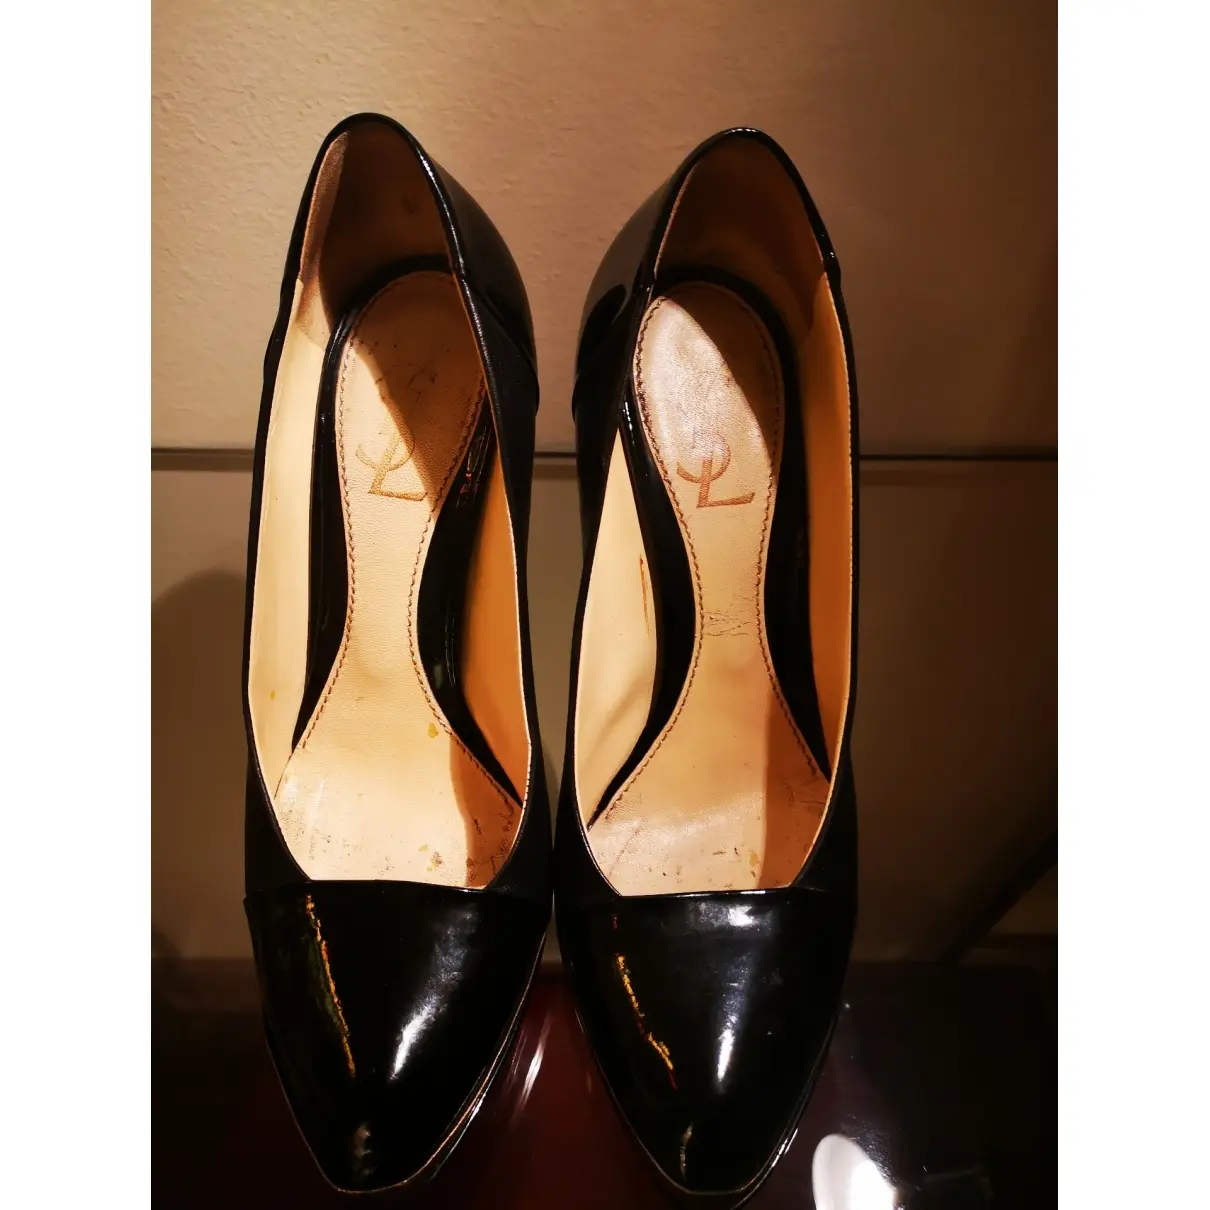 Yves Saint Laurent Trib Too leather heels for sale